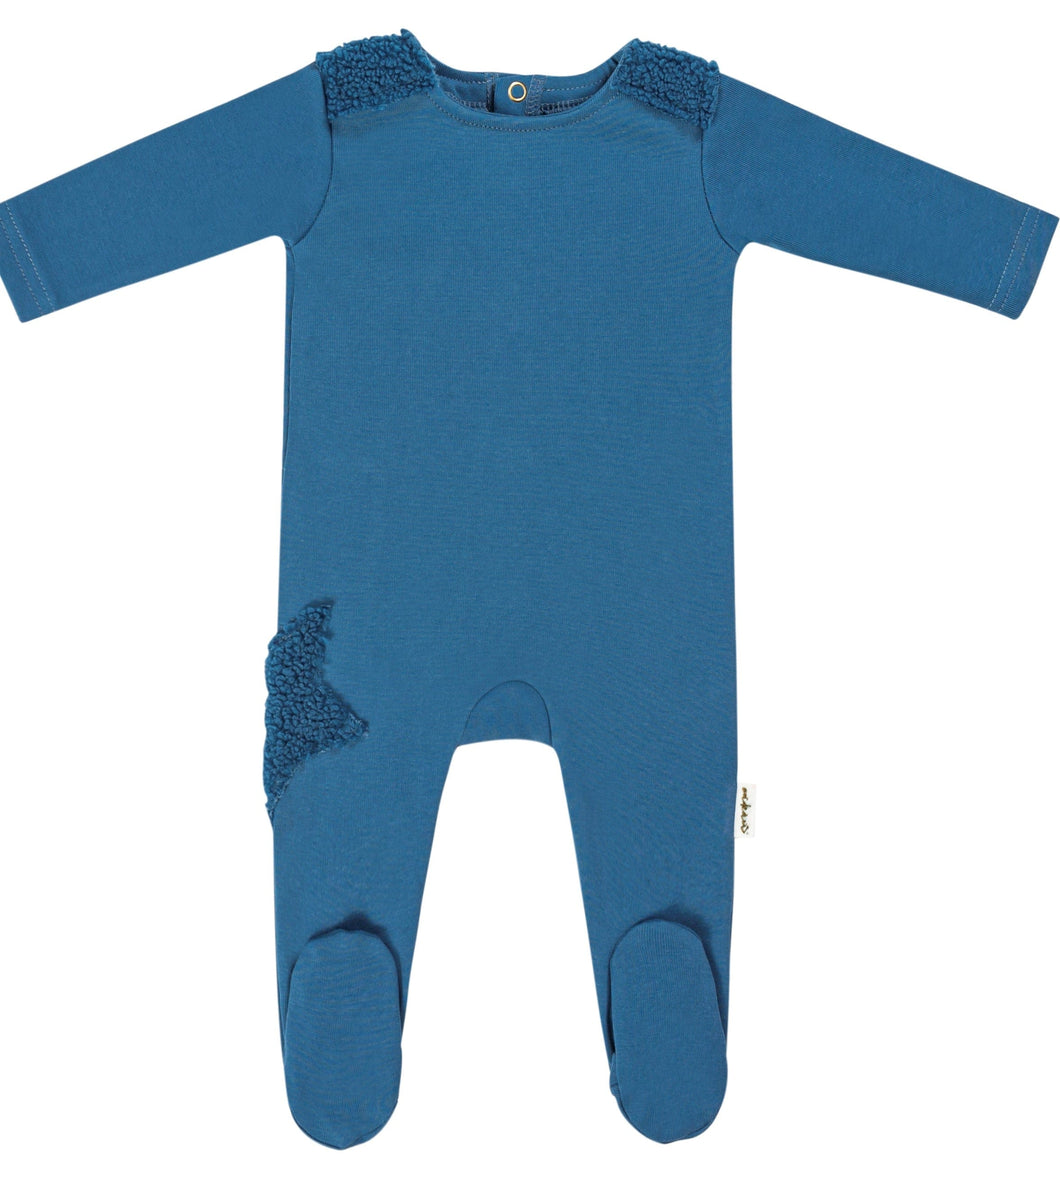 Cadeau Baby 3 Months / Blue Sherpa Star Footie by Cadeau Baby